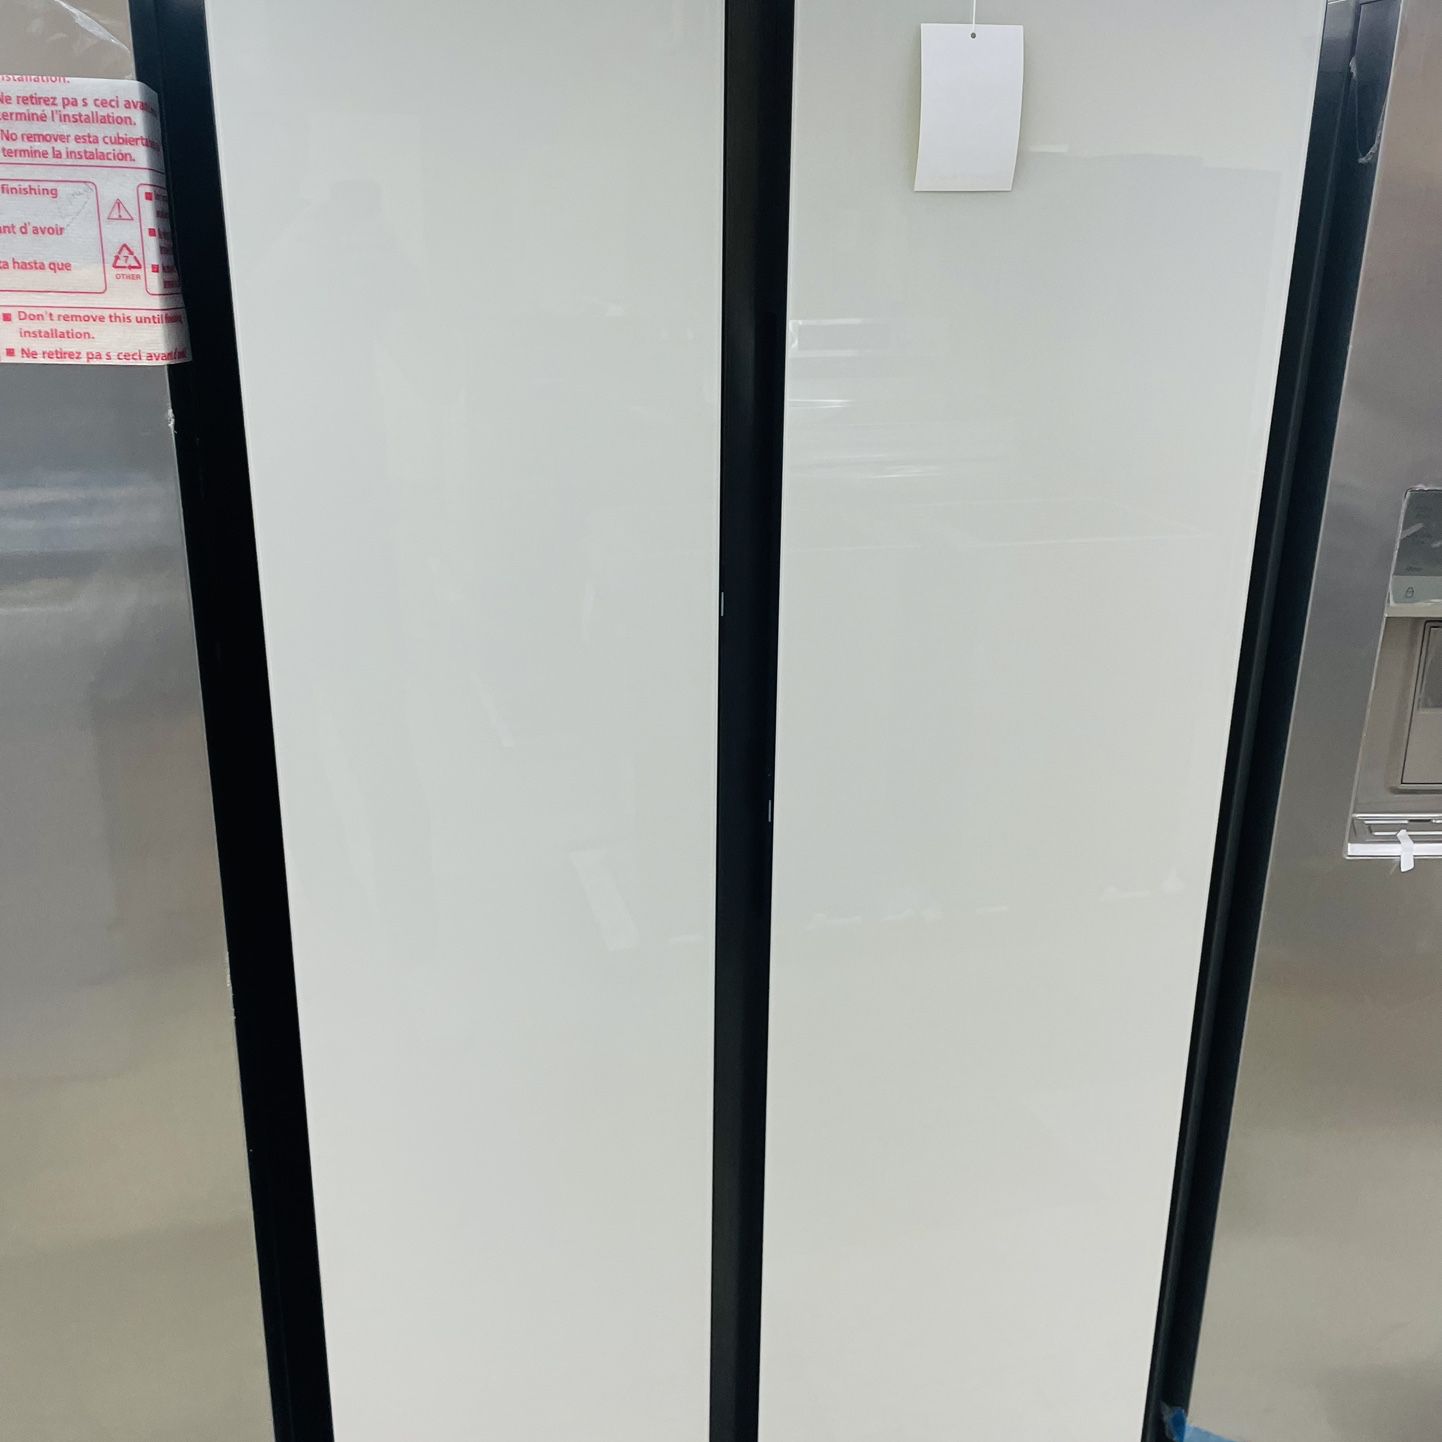 🔥🔥36” Samsung Bspoke Refrigerator 